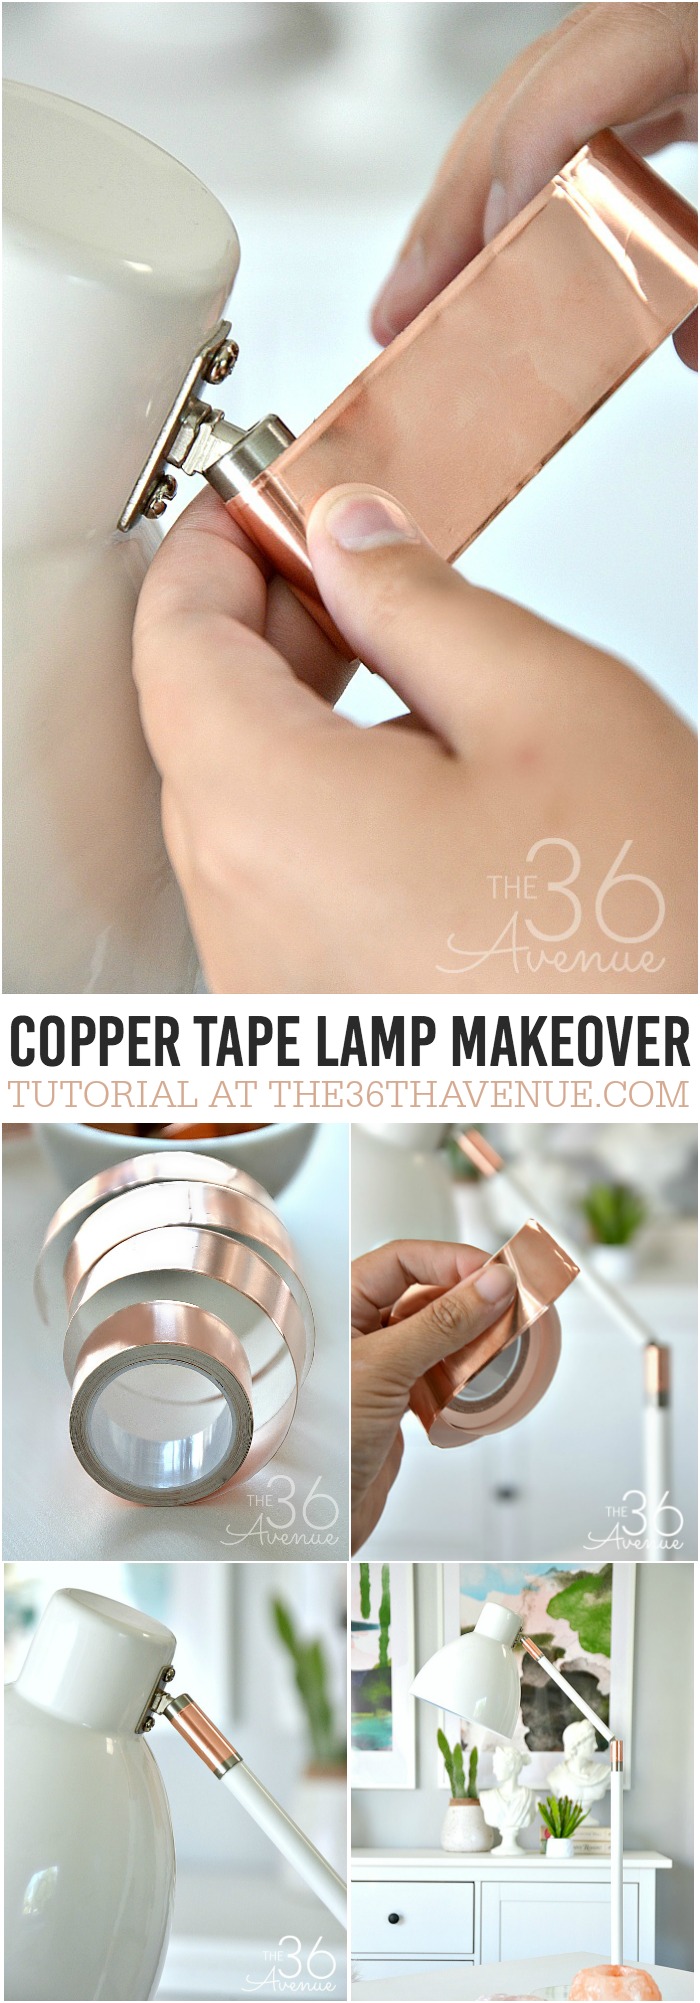 Copper Tape Lamp Makeover